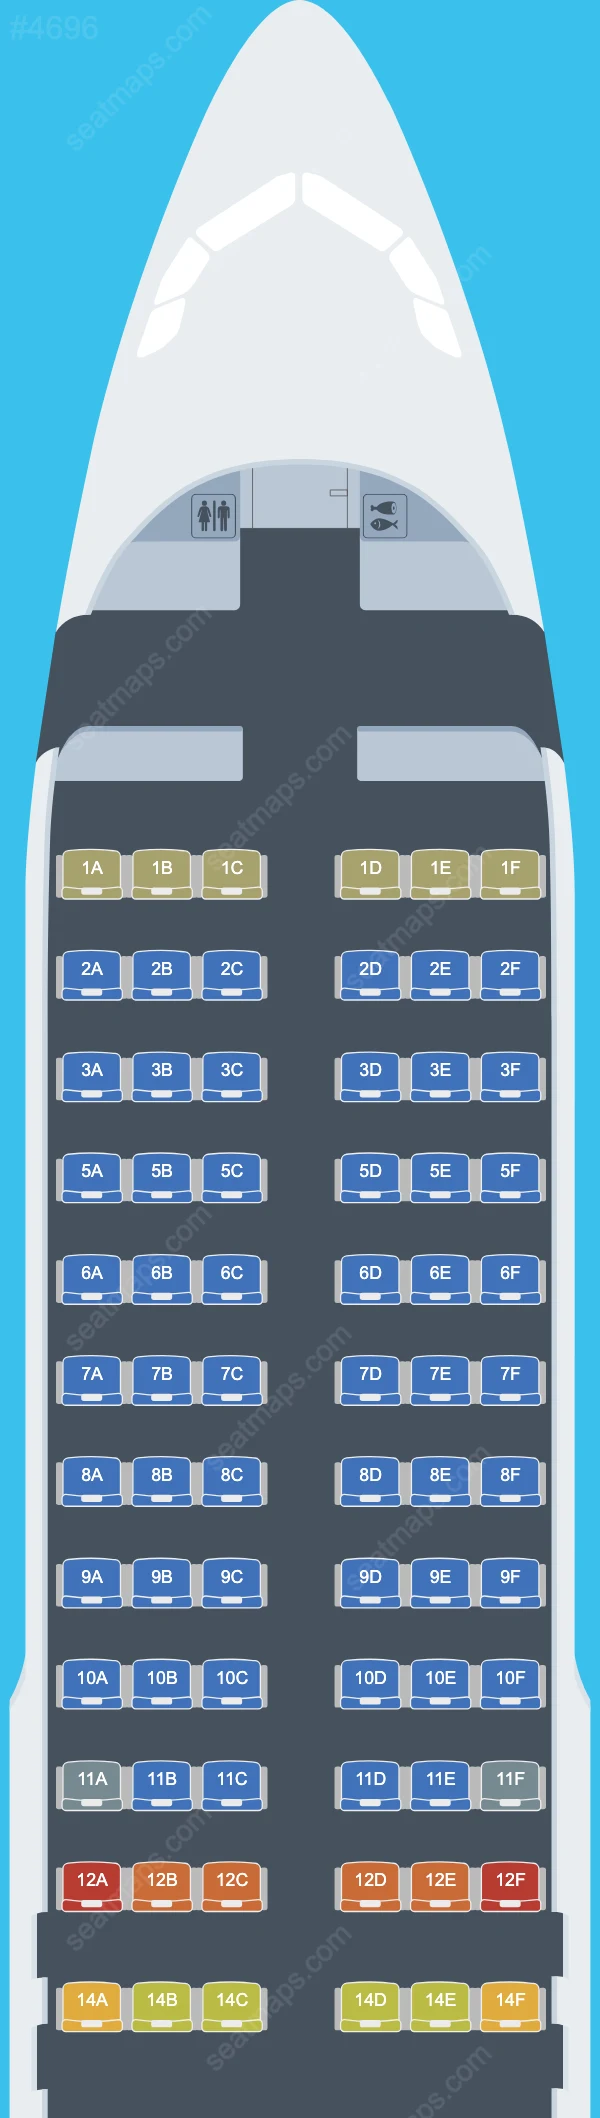 Jordan Aviation Airbus A320 Seat Maps A320-200 V.1